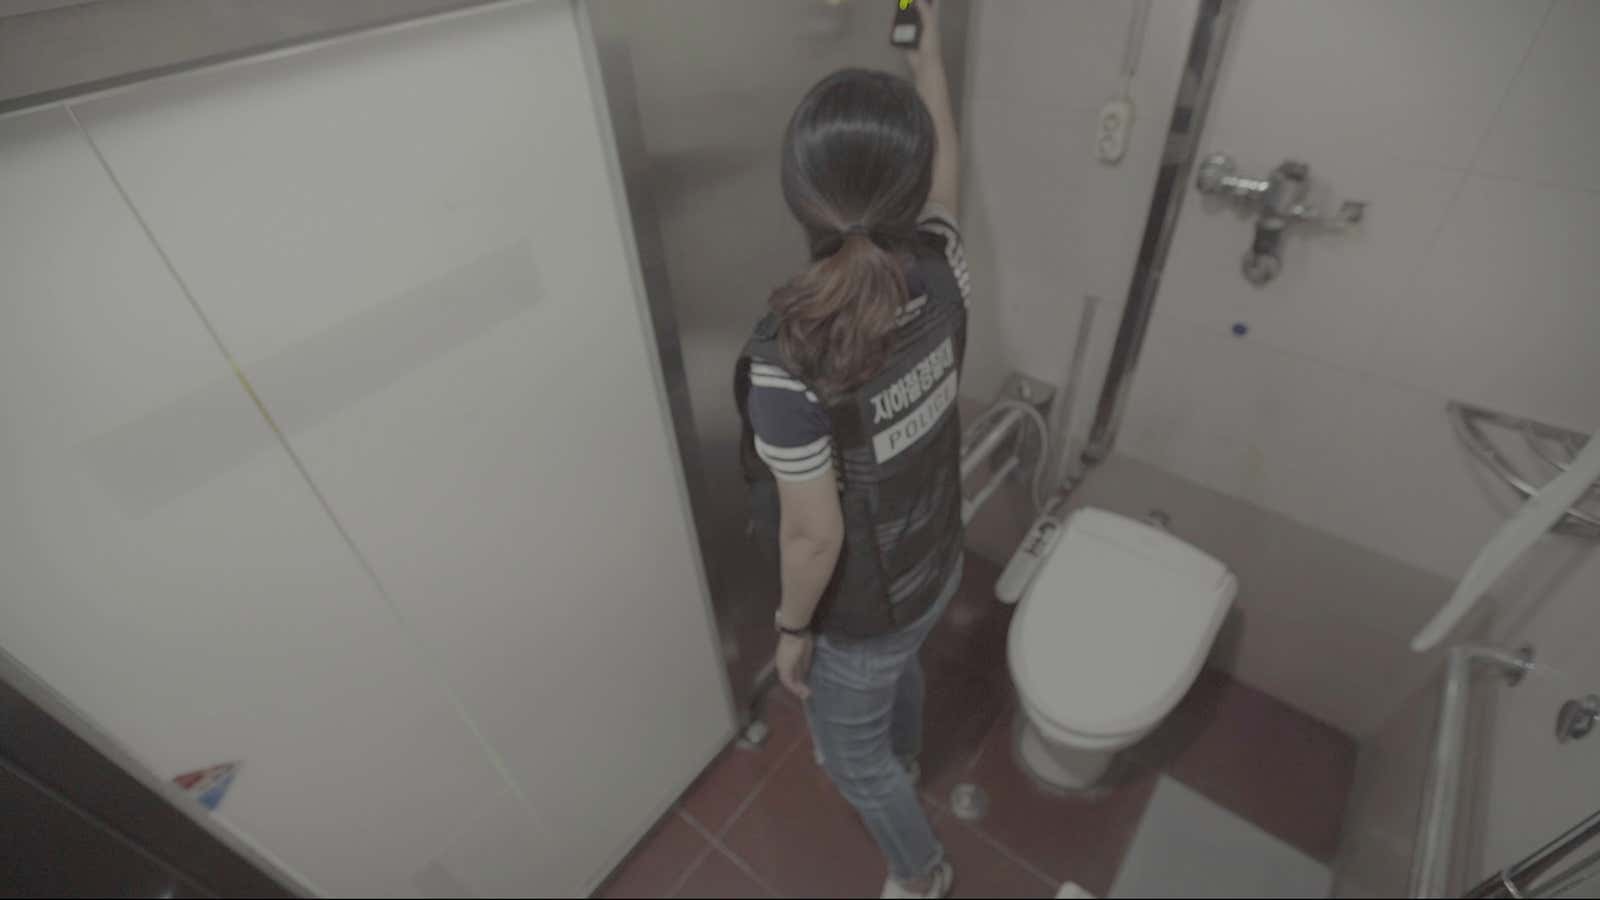 Heedan Camera Teen Sex Video In The Park - South Korean women dread public bathrooms because of spy-cam porn